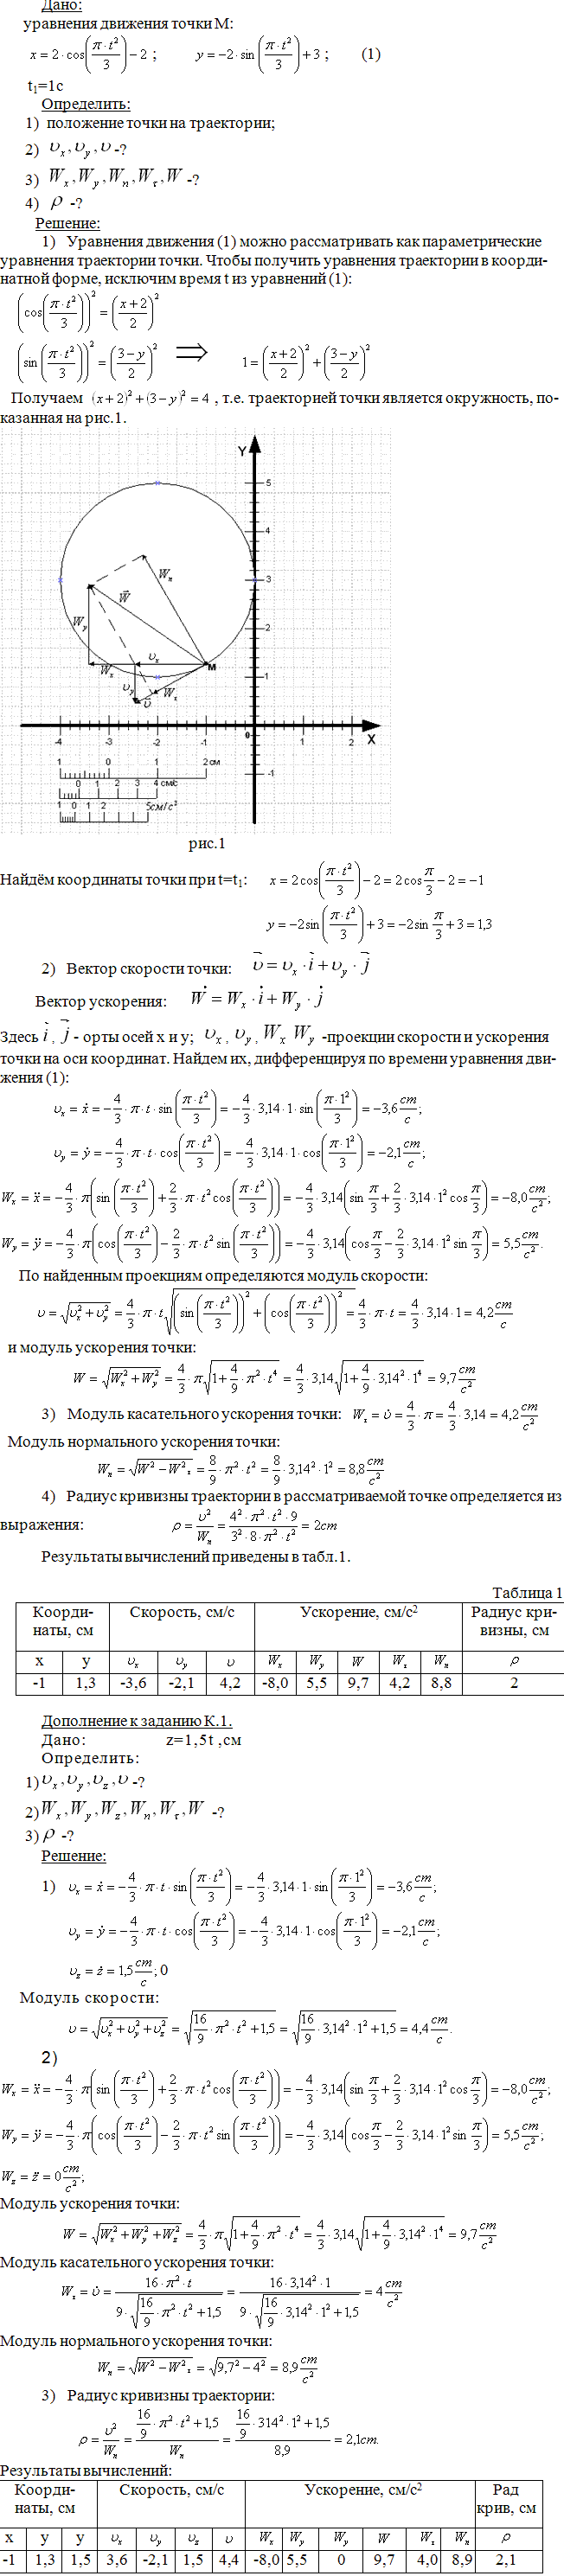 Задание К.1 вариант 30. x t)=2cos(πt^2/3)-2, y(t)=-2sin(πt2/3 + 3, t1=1 с